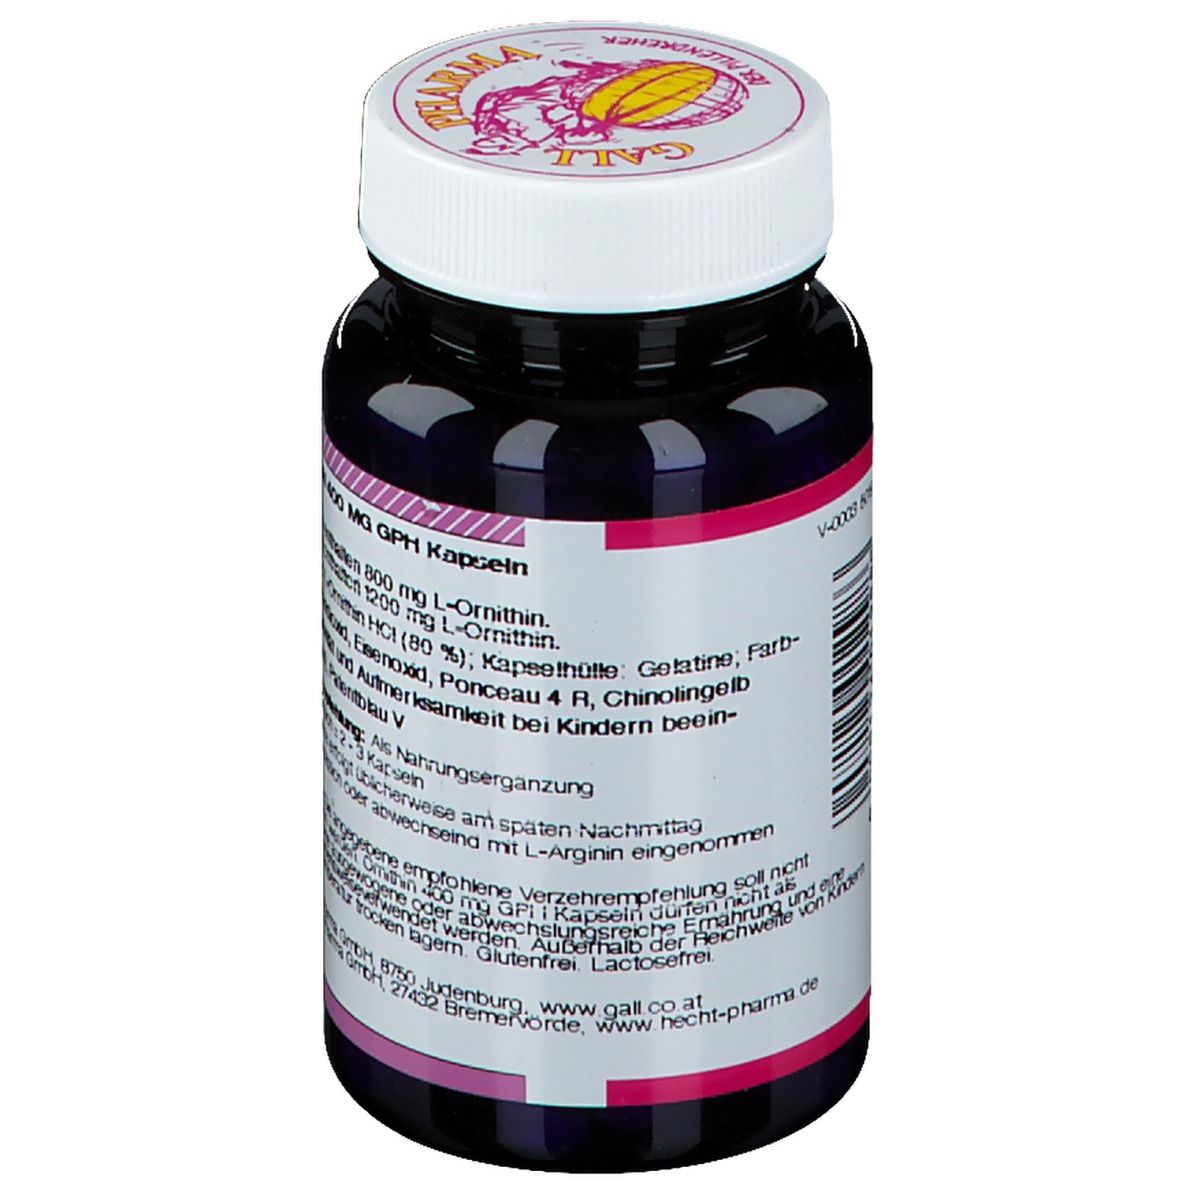 GALL PHARMA Ornithin 400 mg GPH Kapseln